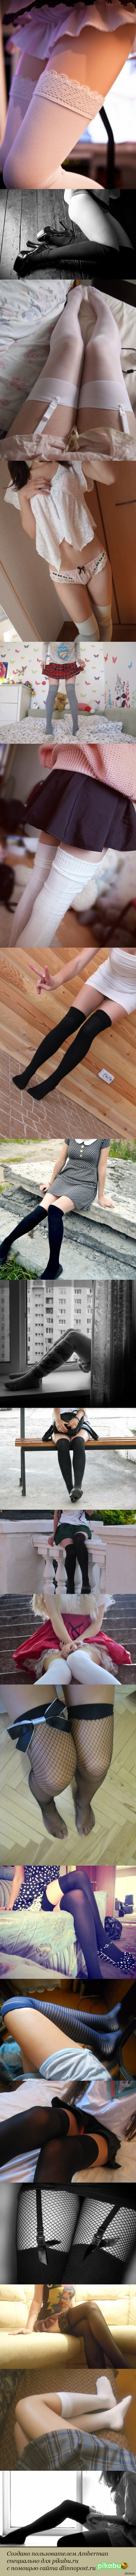 Compilation of women's legs in stockings - Longpost, Stockings, Knee socks, Legs, Fetishism, Girls, Socks, Zettai ryouiki, NSFW